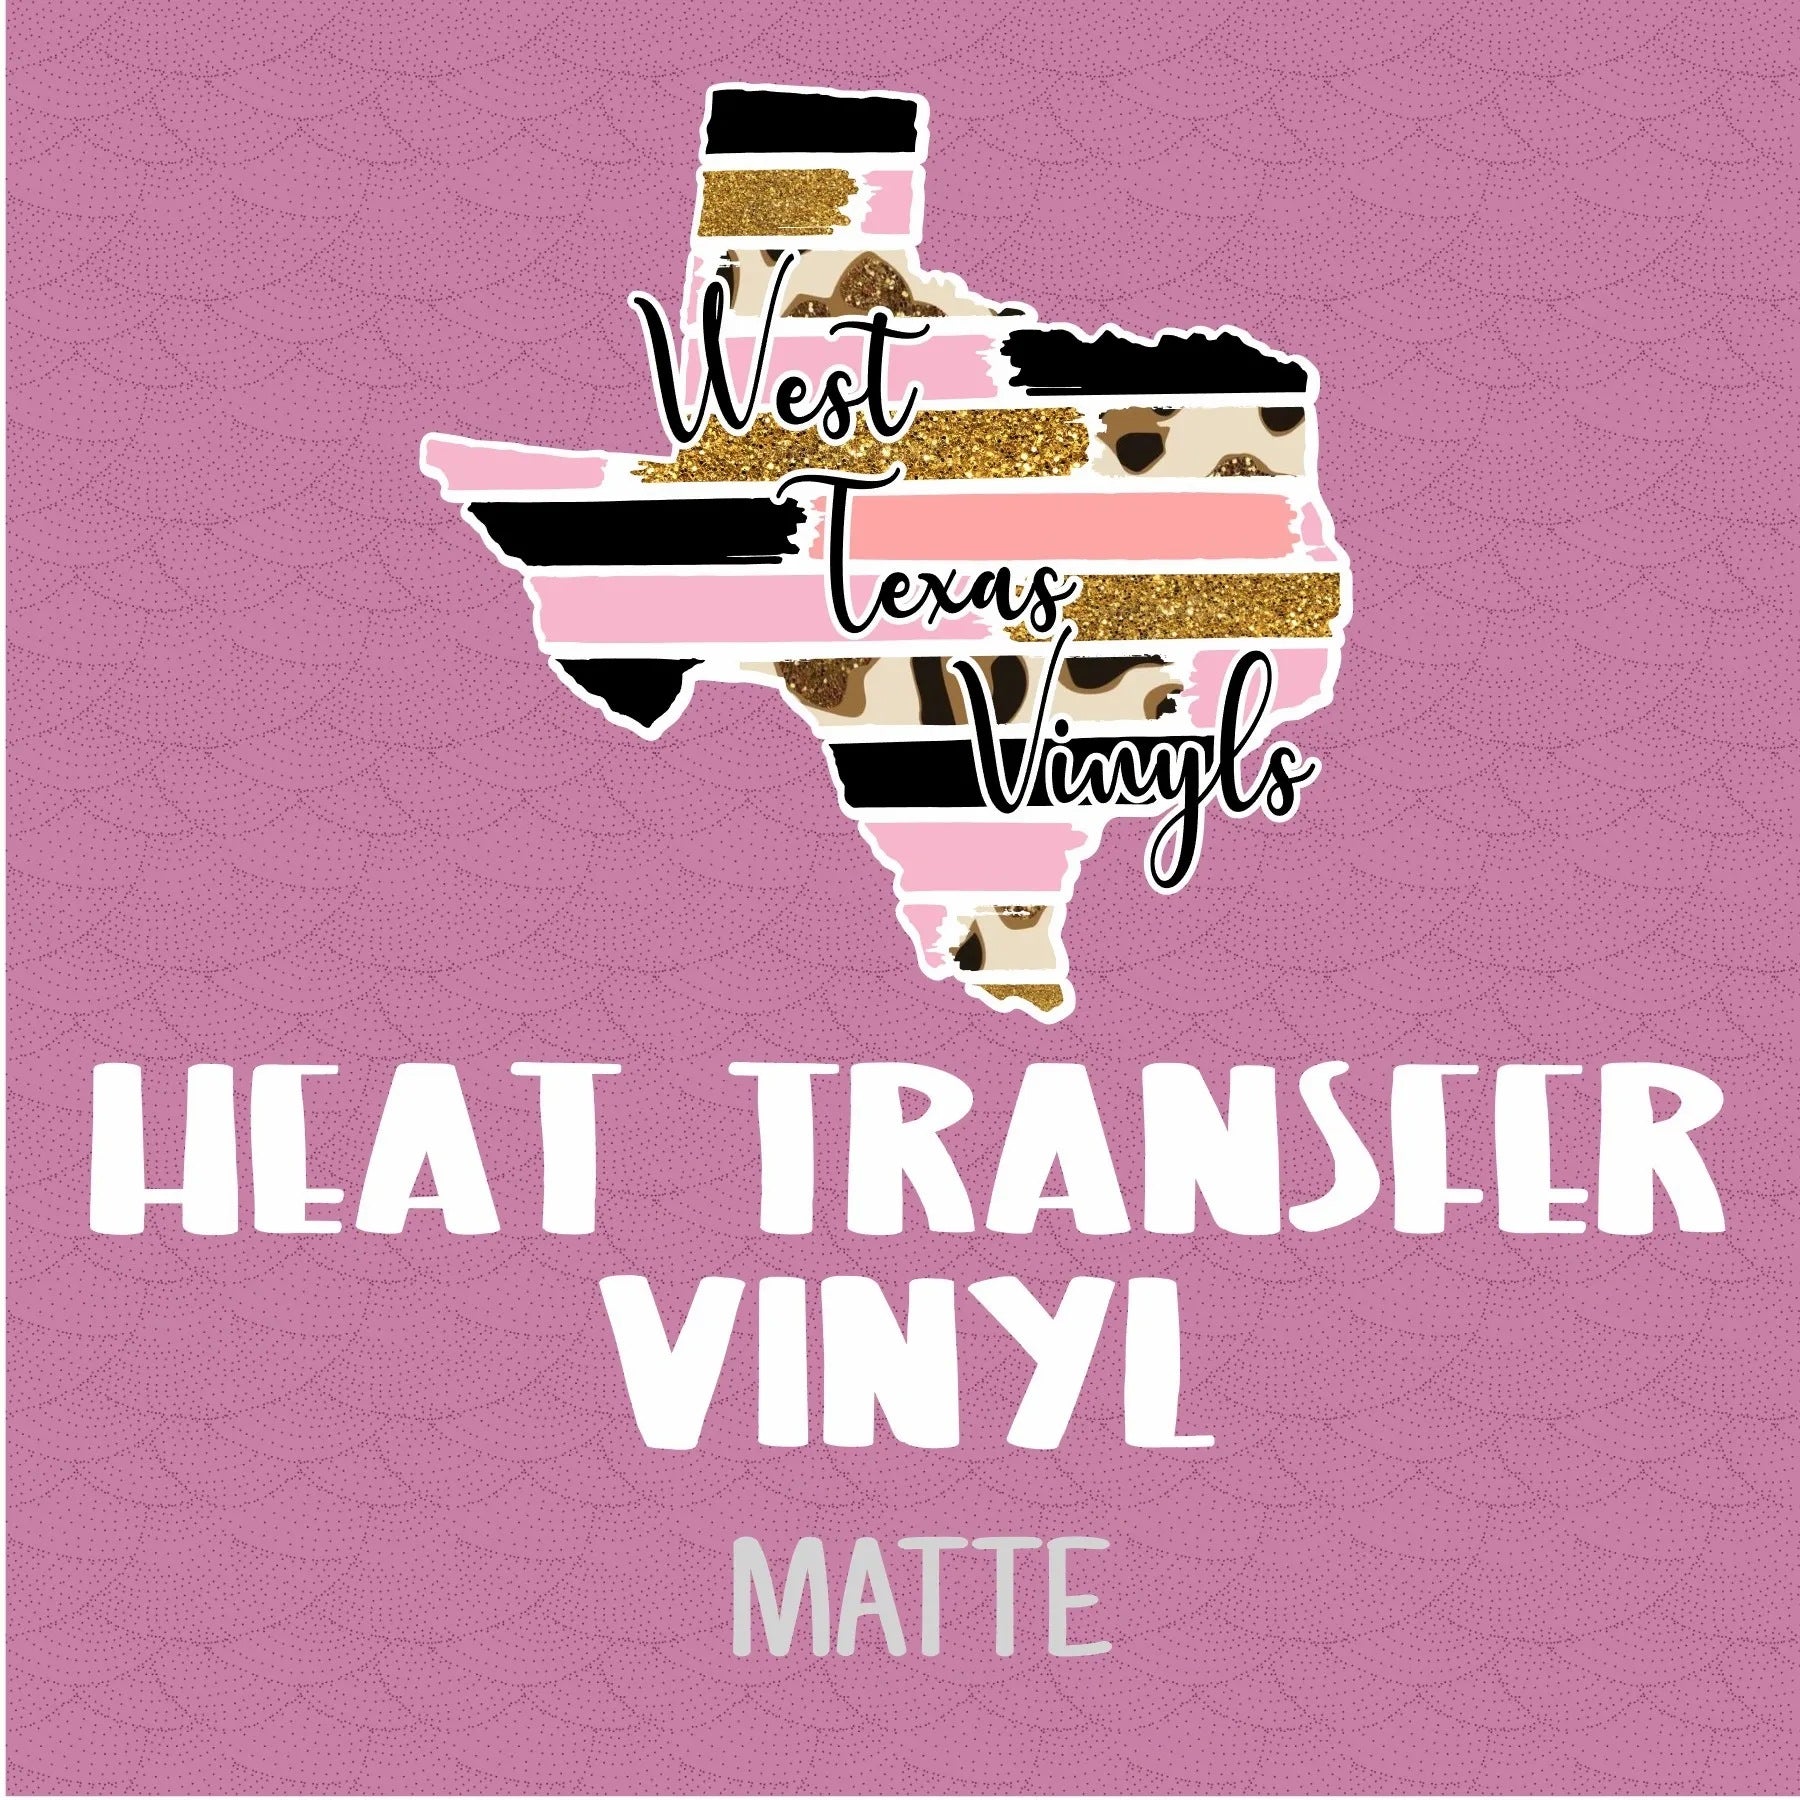 Siser Easyweed HTV Heat Transfer Vinyl - 12x1yd